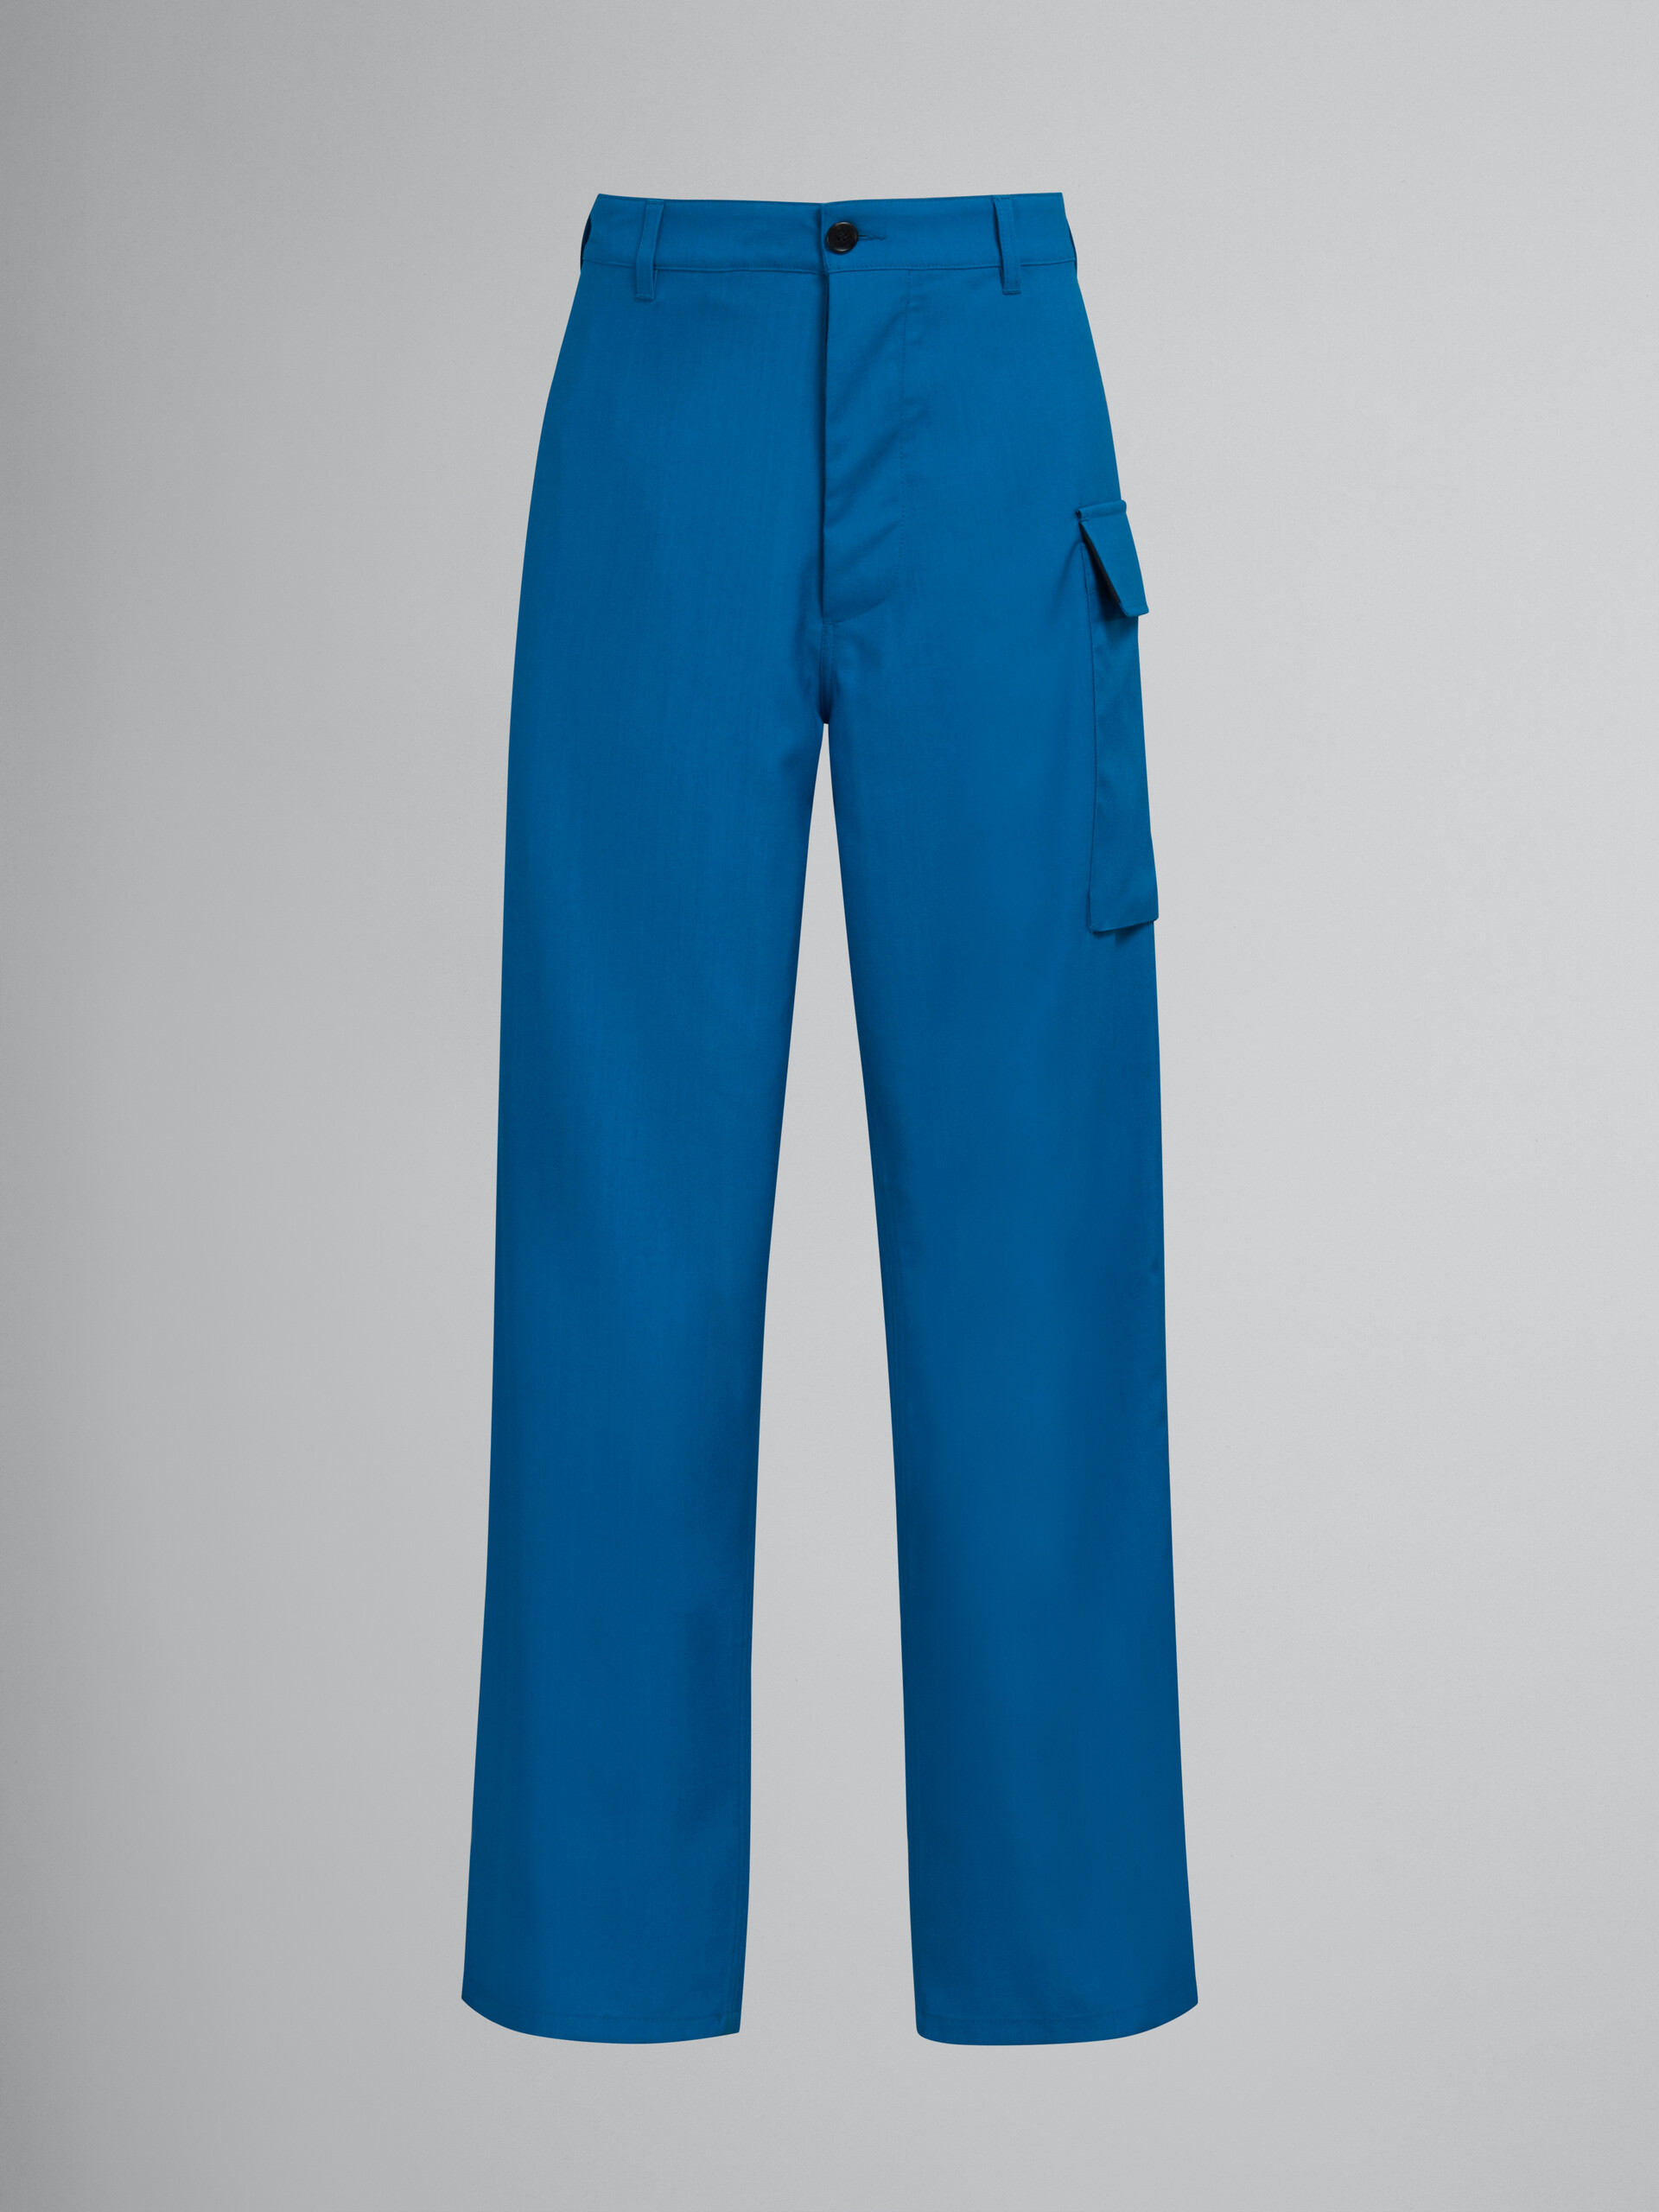 Pantaloni in fresco lana blu petrolio con tasche cargo - Pantaloni - Image 1